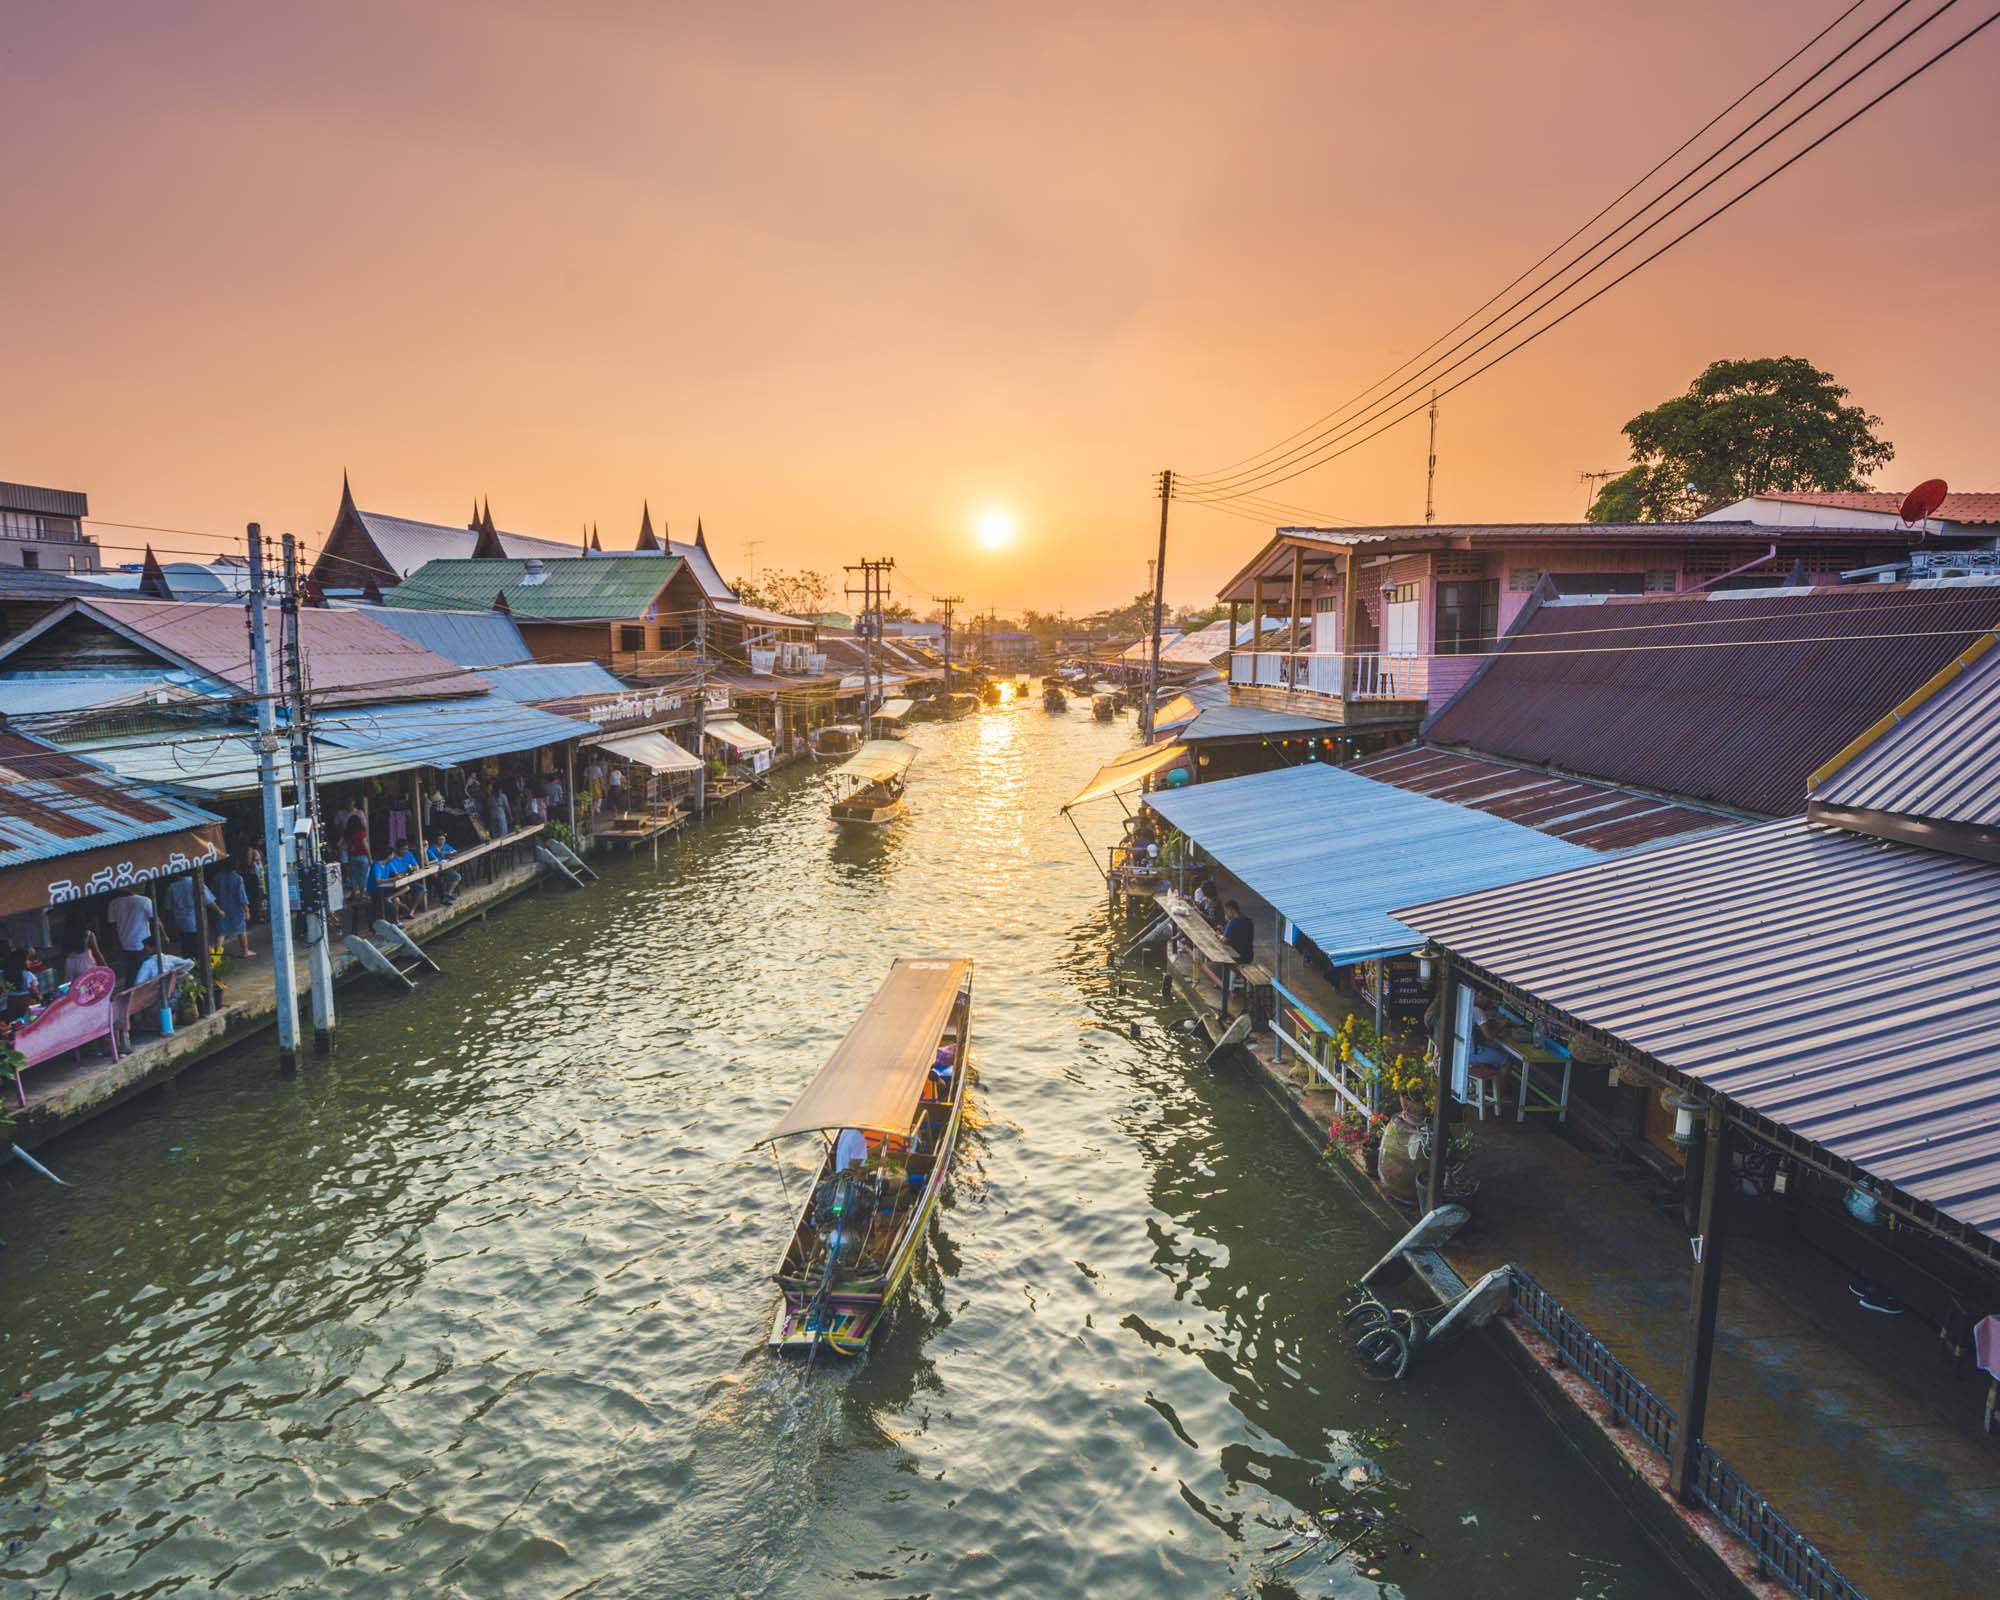 Bangkok canals allow you to make your way through the city